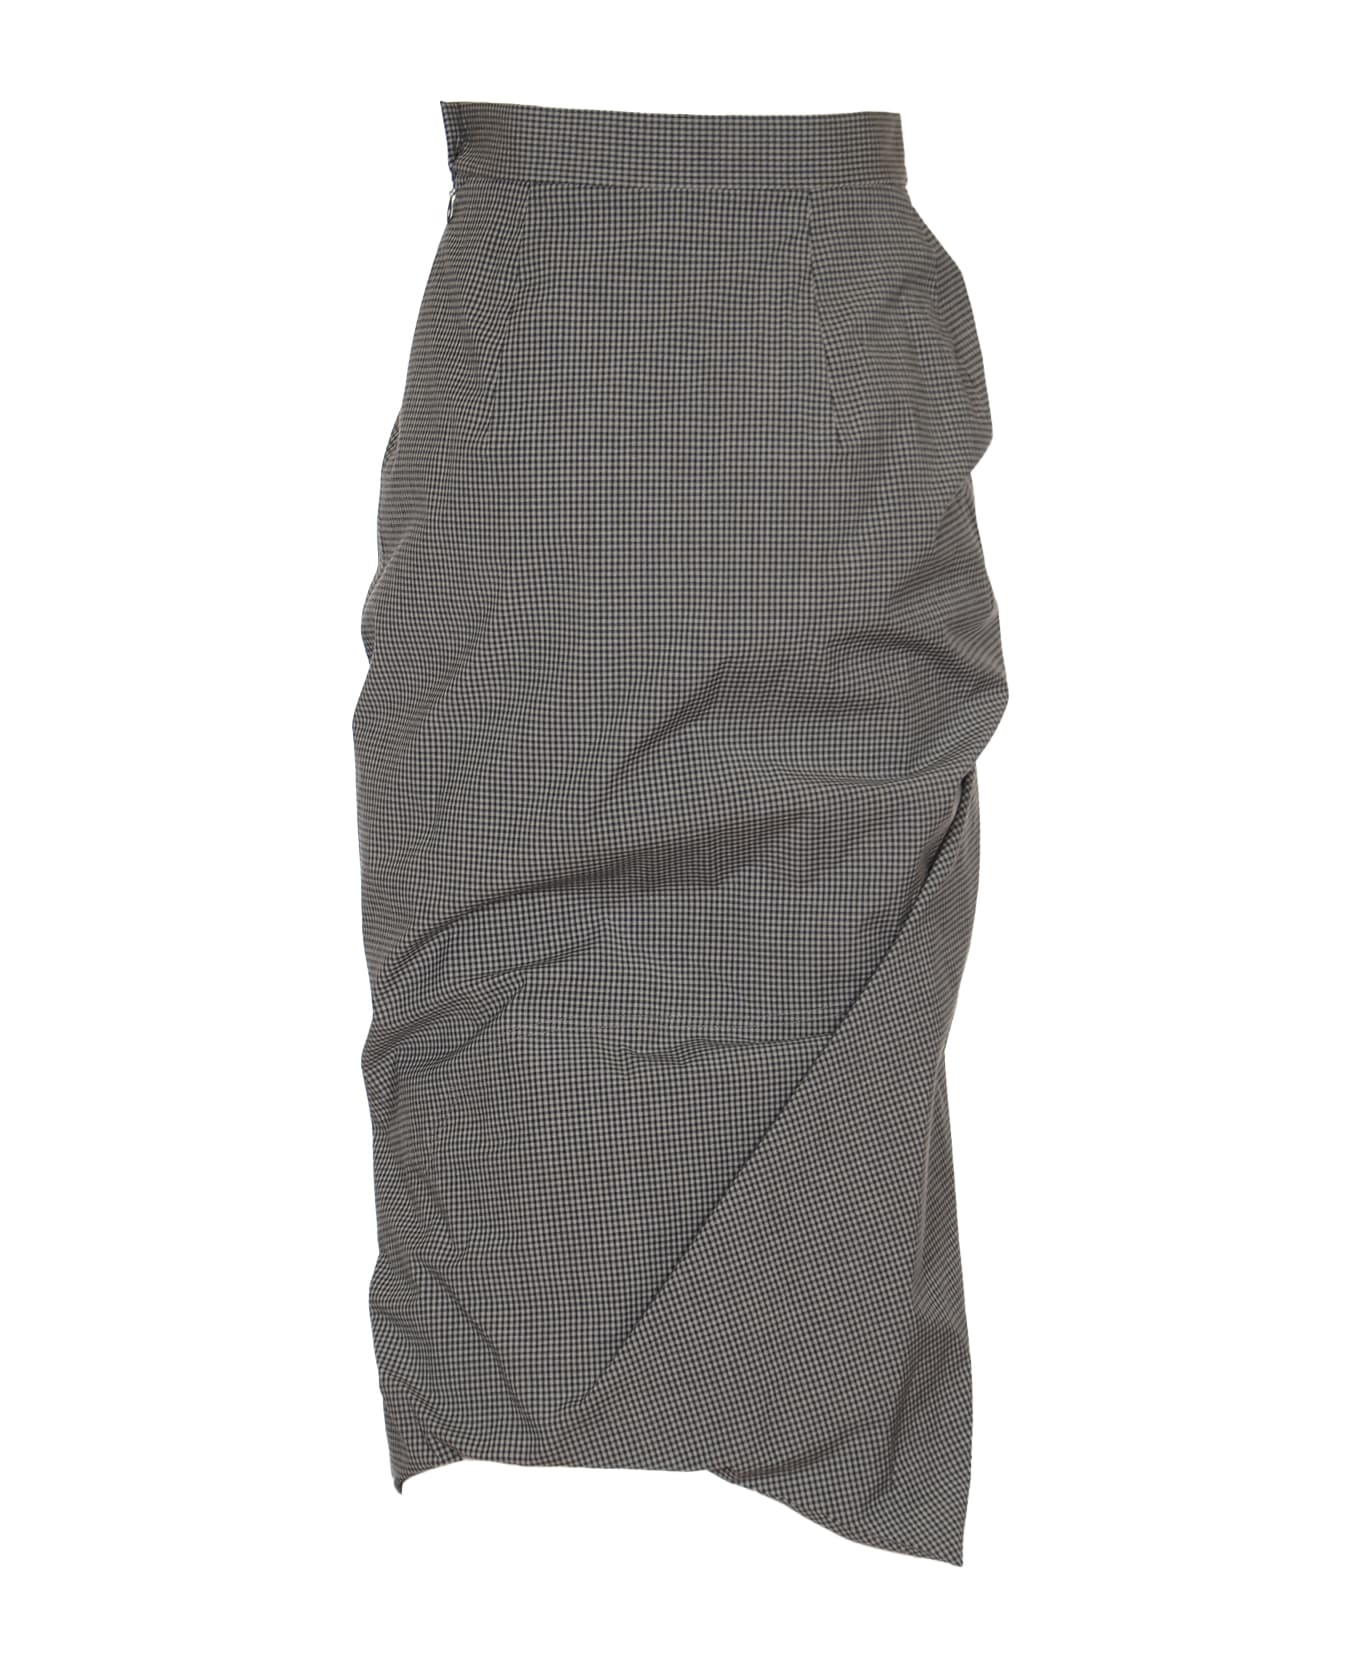 Vivienne Westwood Side Panther Skirt - Gingham スカート